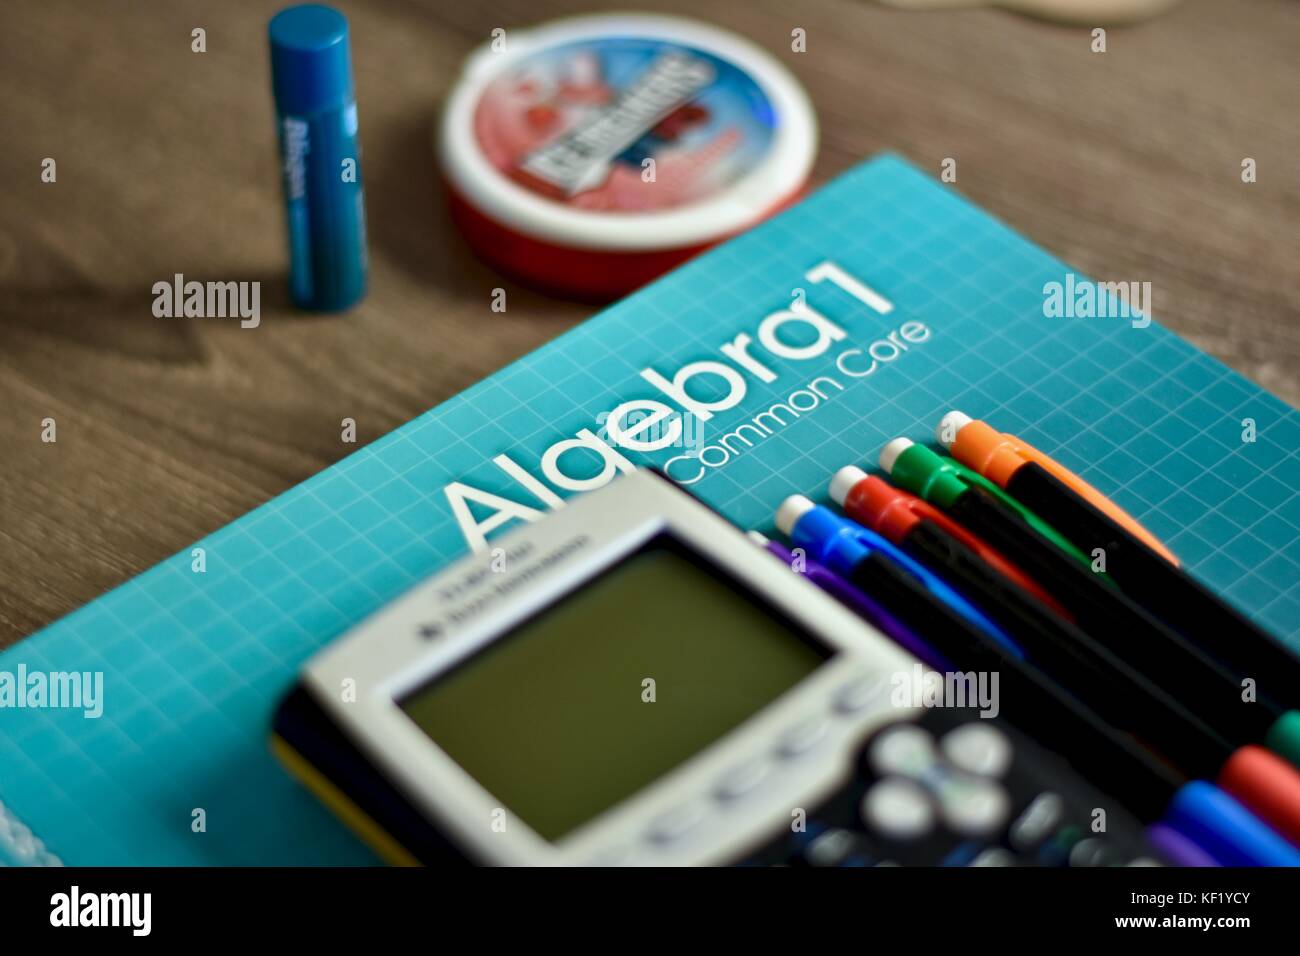 Algebra math book on desk next to classroom materials Stock Photo